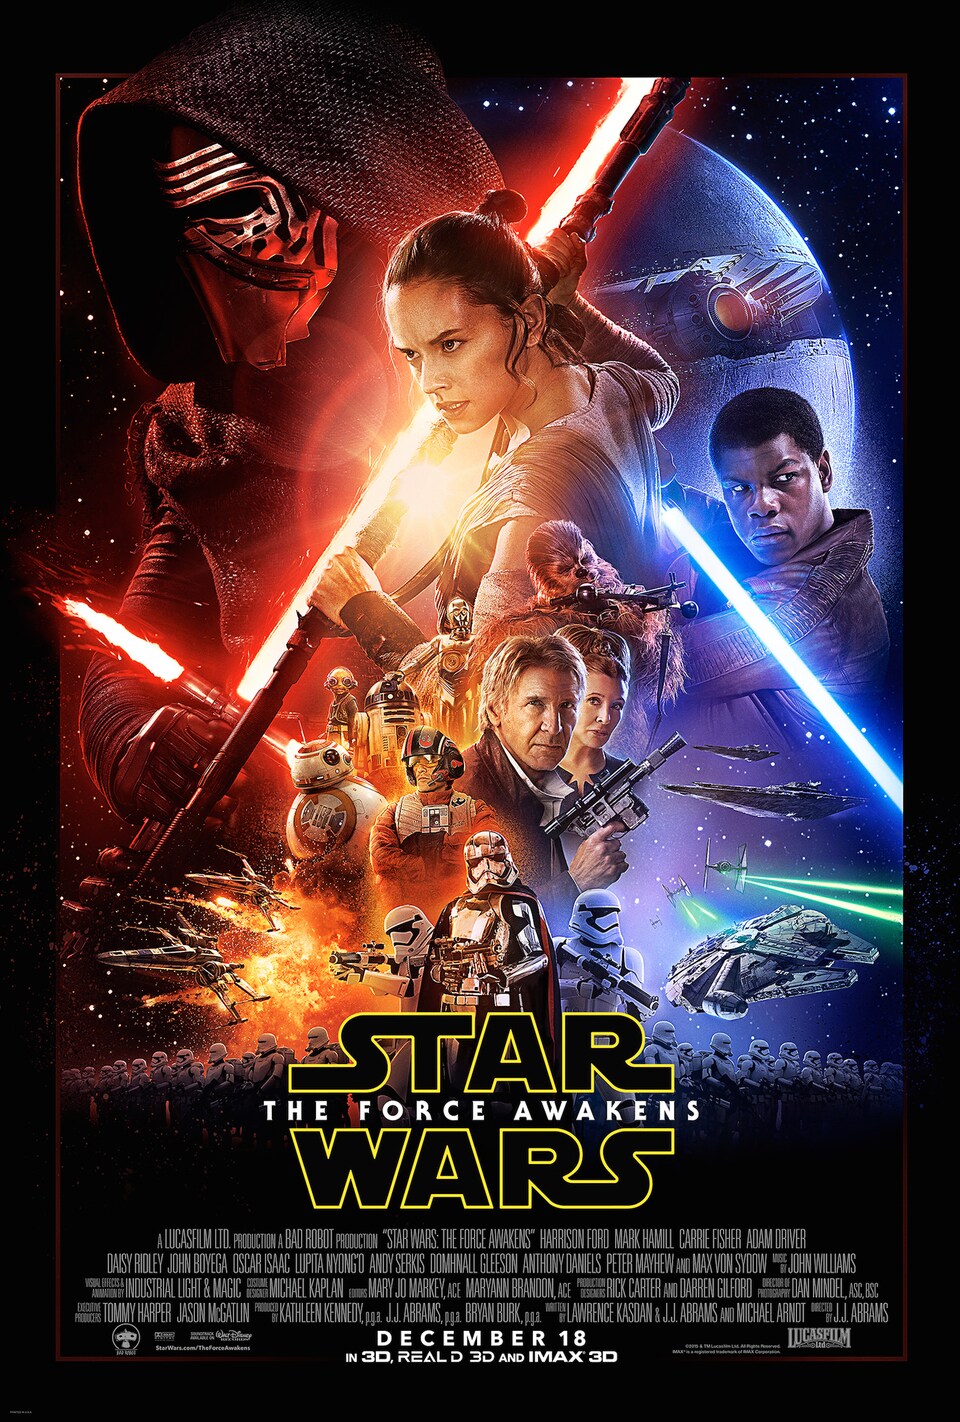 Star Wars Episode Vii The Force Awakens Starwars Com